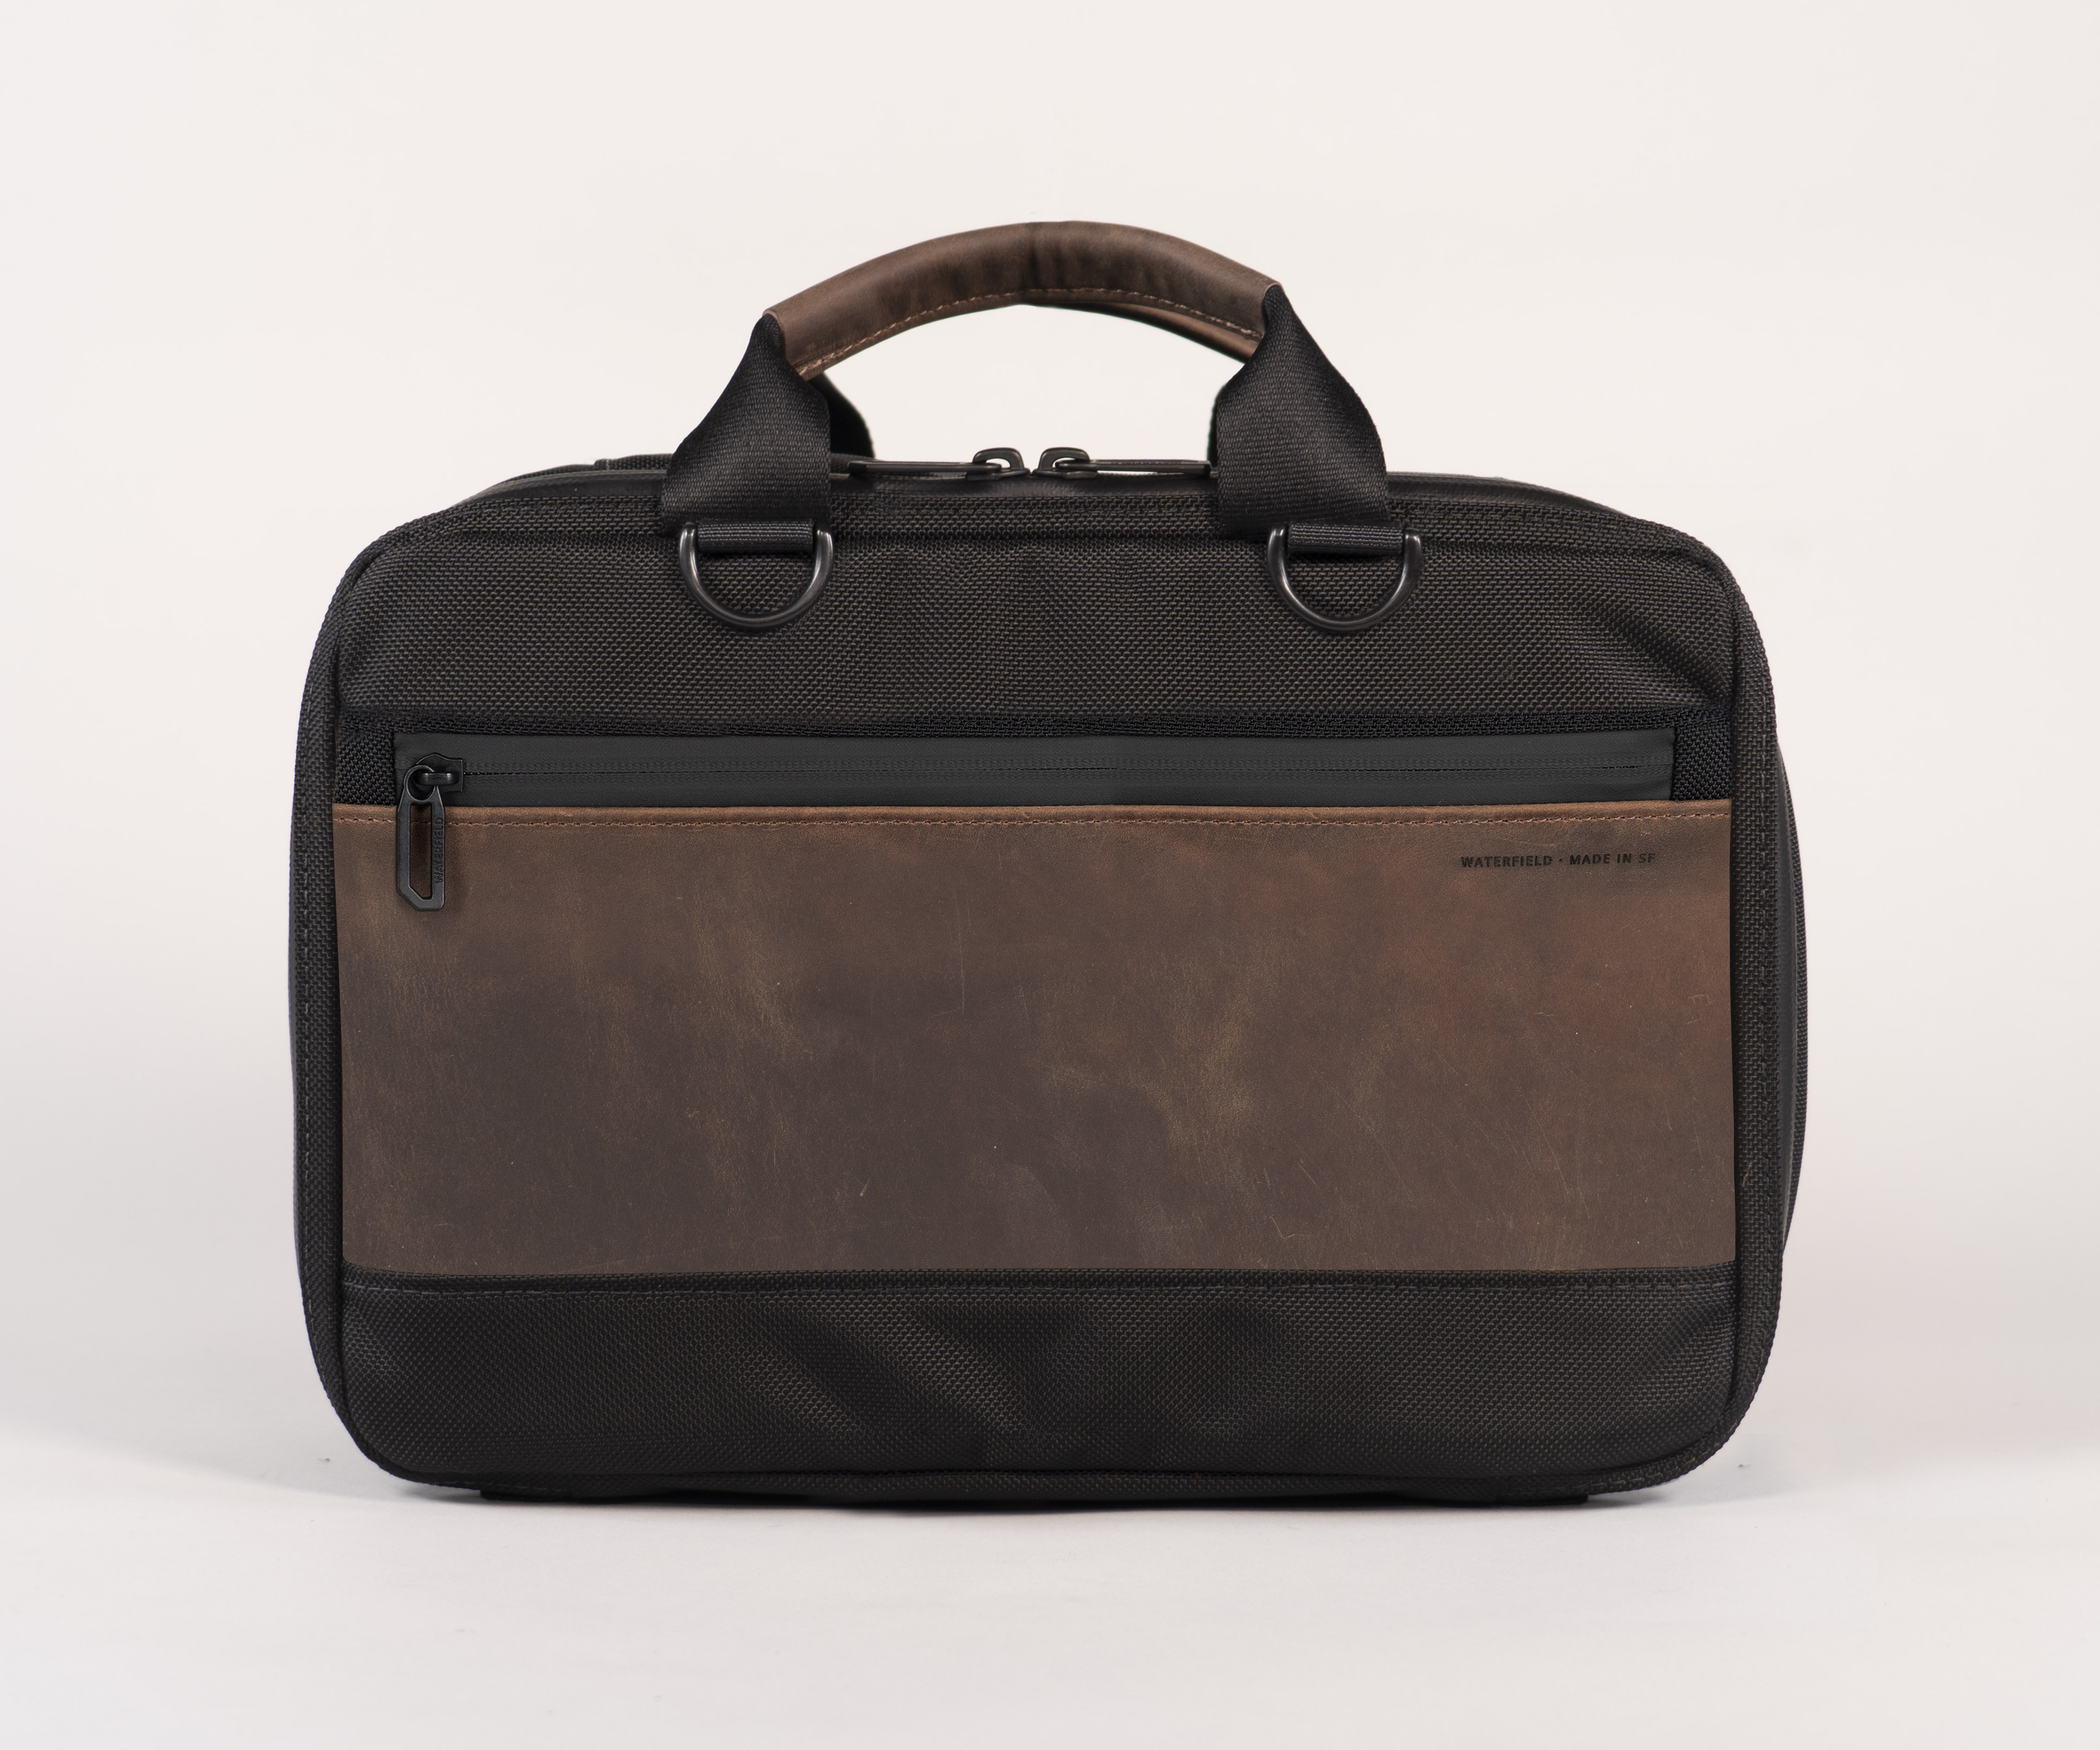 Mac Studio Travel Bag in black ballistic nylon and full-grain chocolate leather